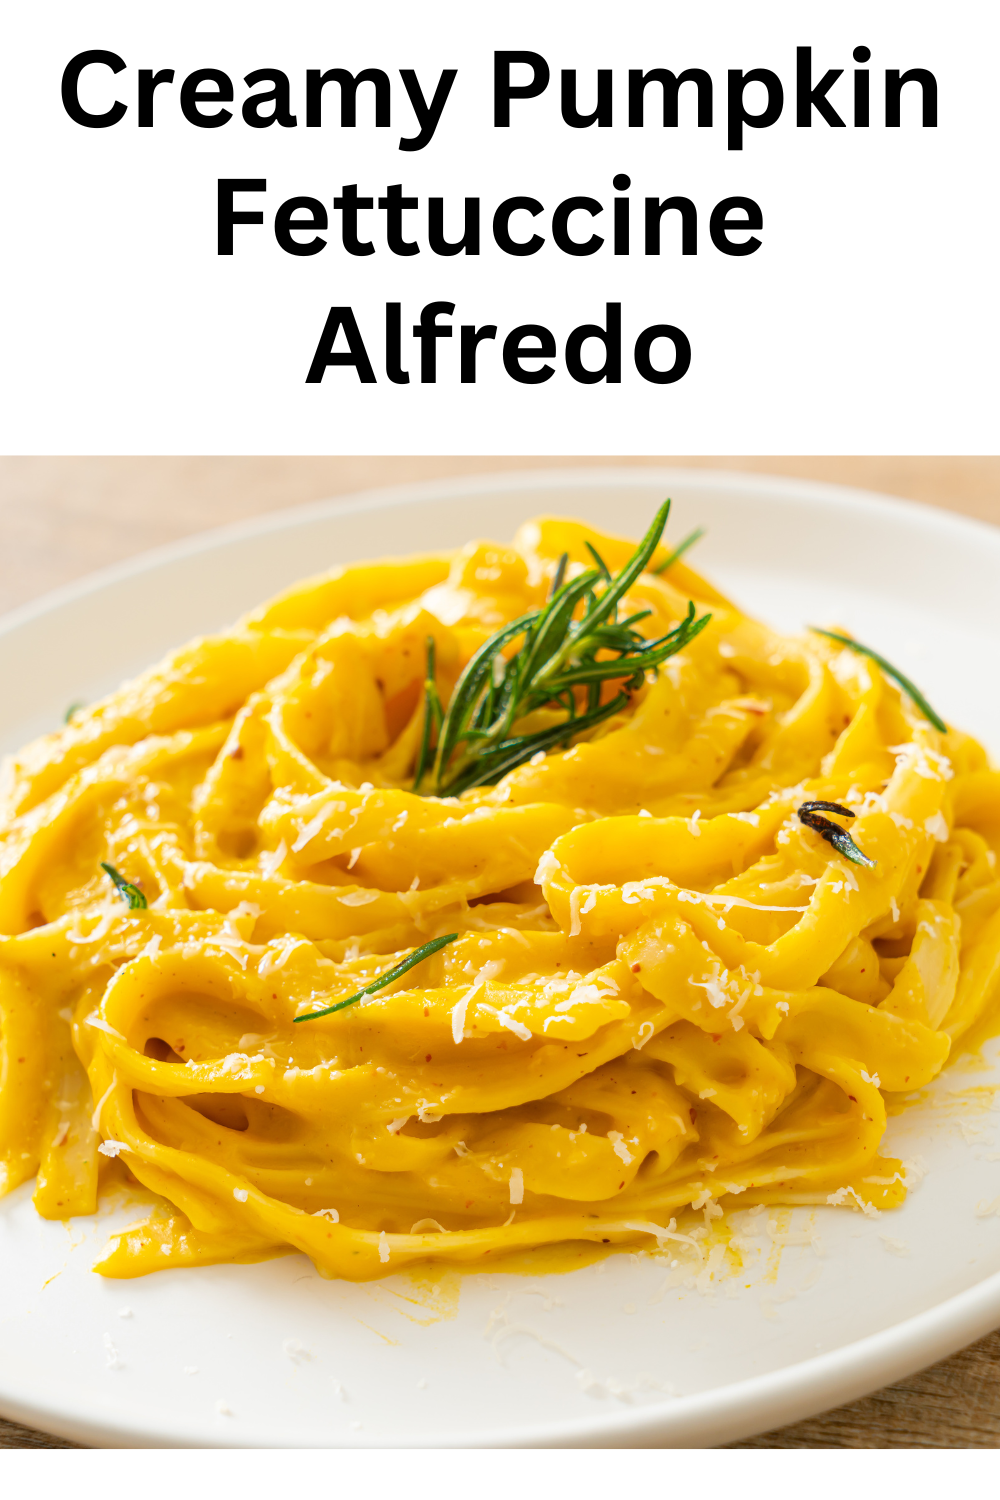 Creamy Pumpkin Fettuccine Alfredo